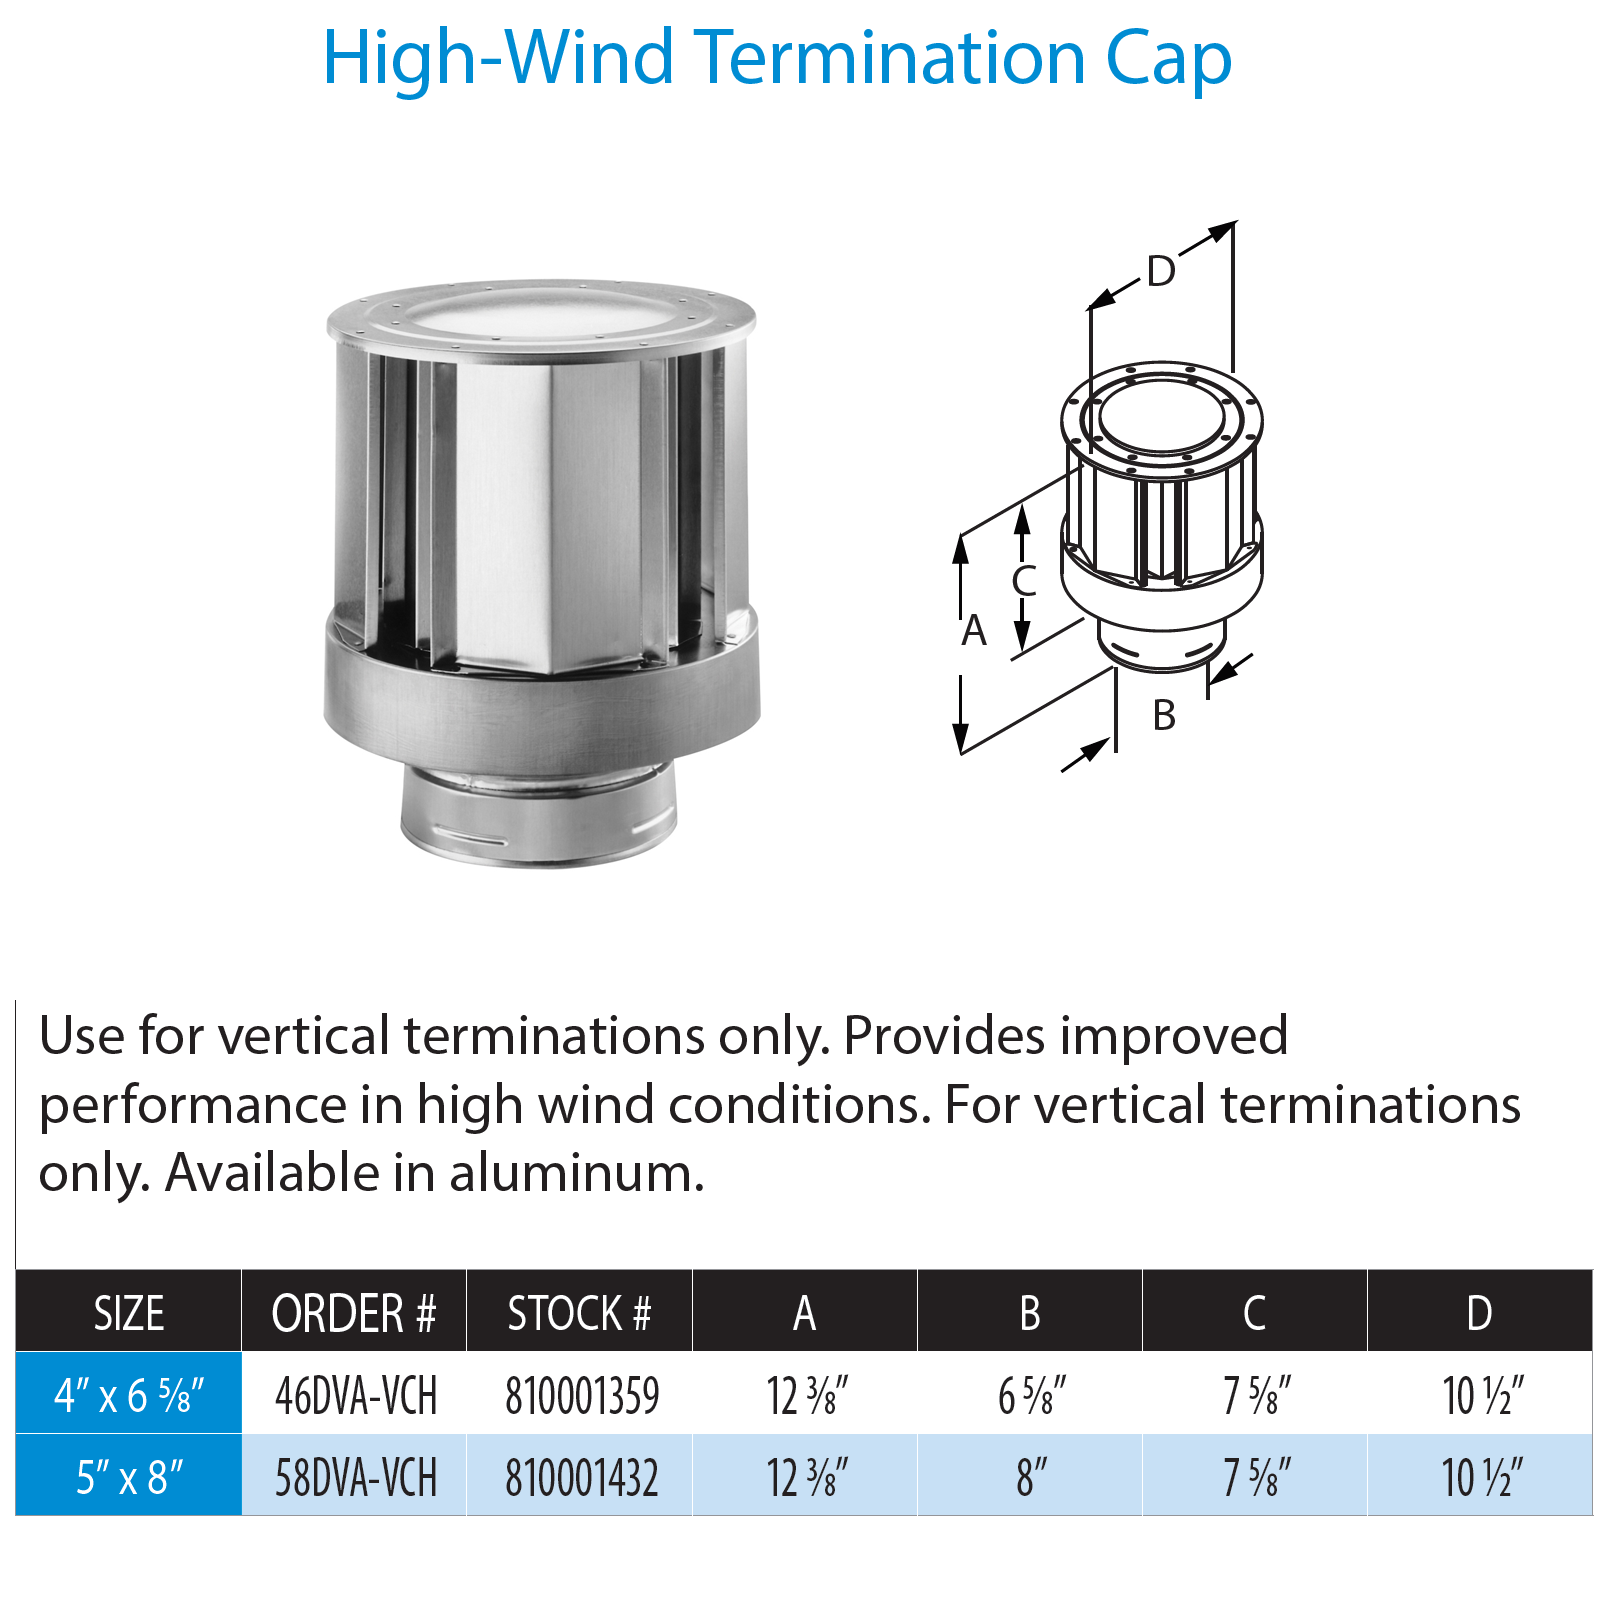 DuraVent DVP High Wind Vertical Termination Cap | 58DVA-VCH